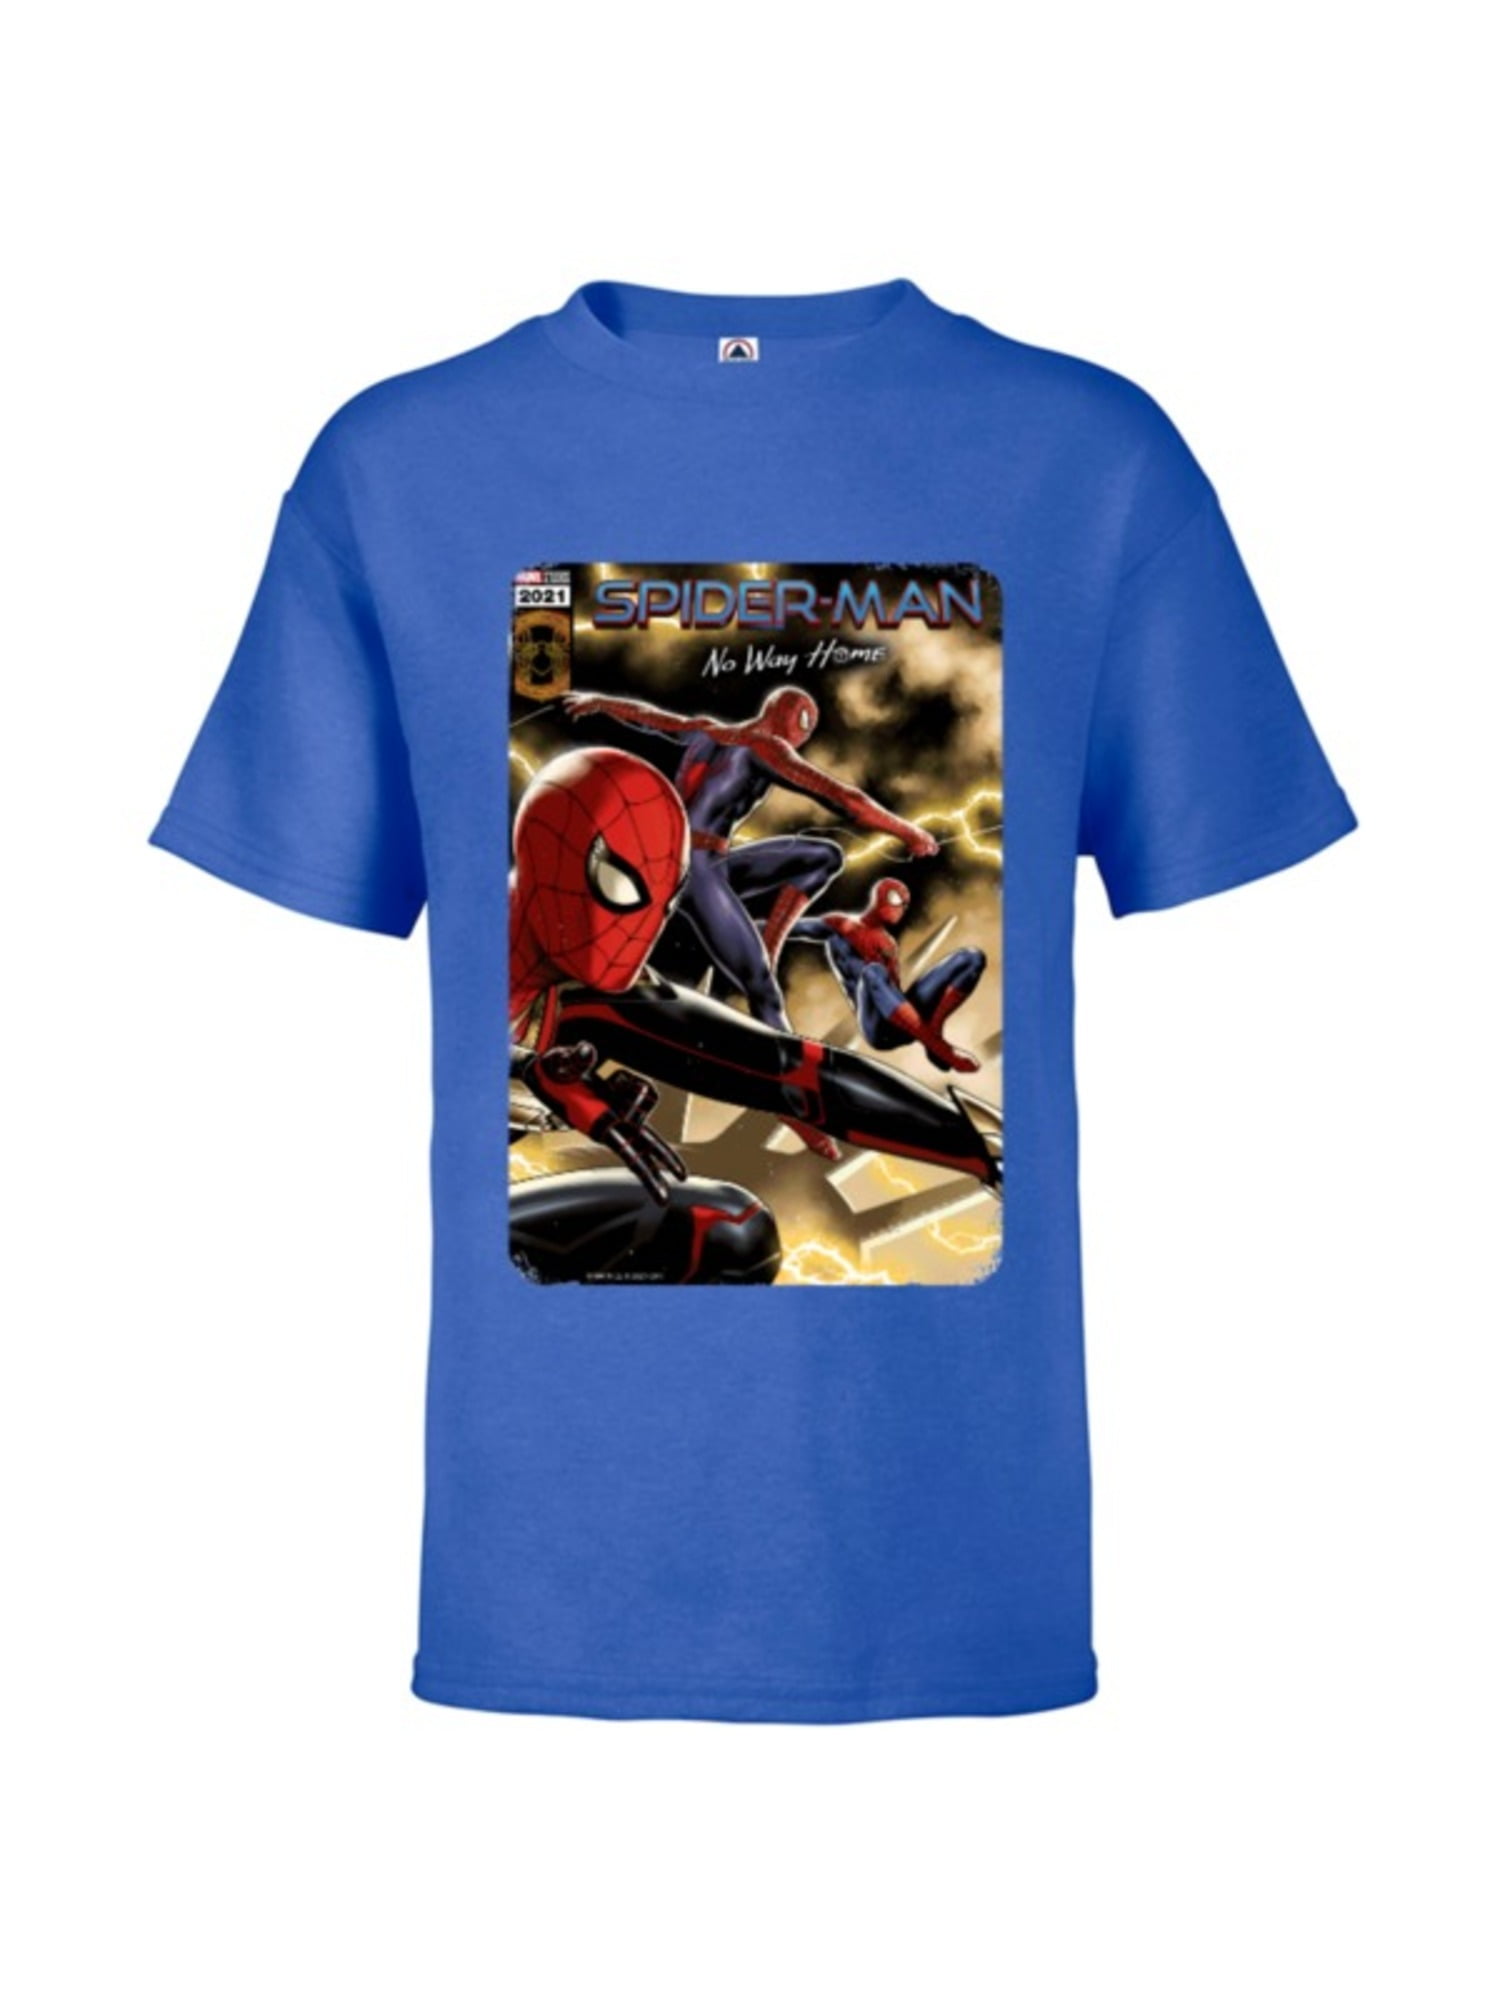 Marvel Comics Spider Man T-Shirt Long Sleeve Youth Size M,L,XL,XXL Kids Tee NEW